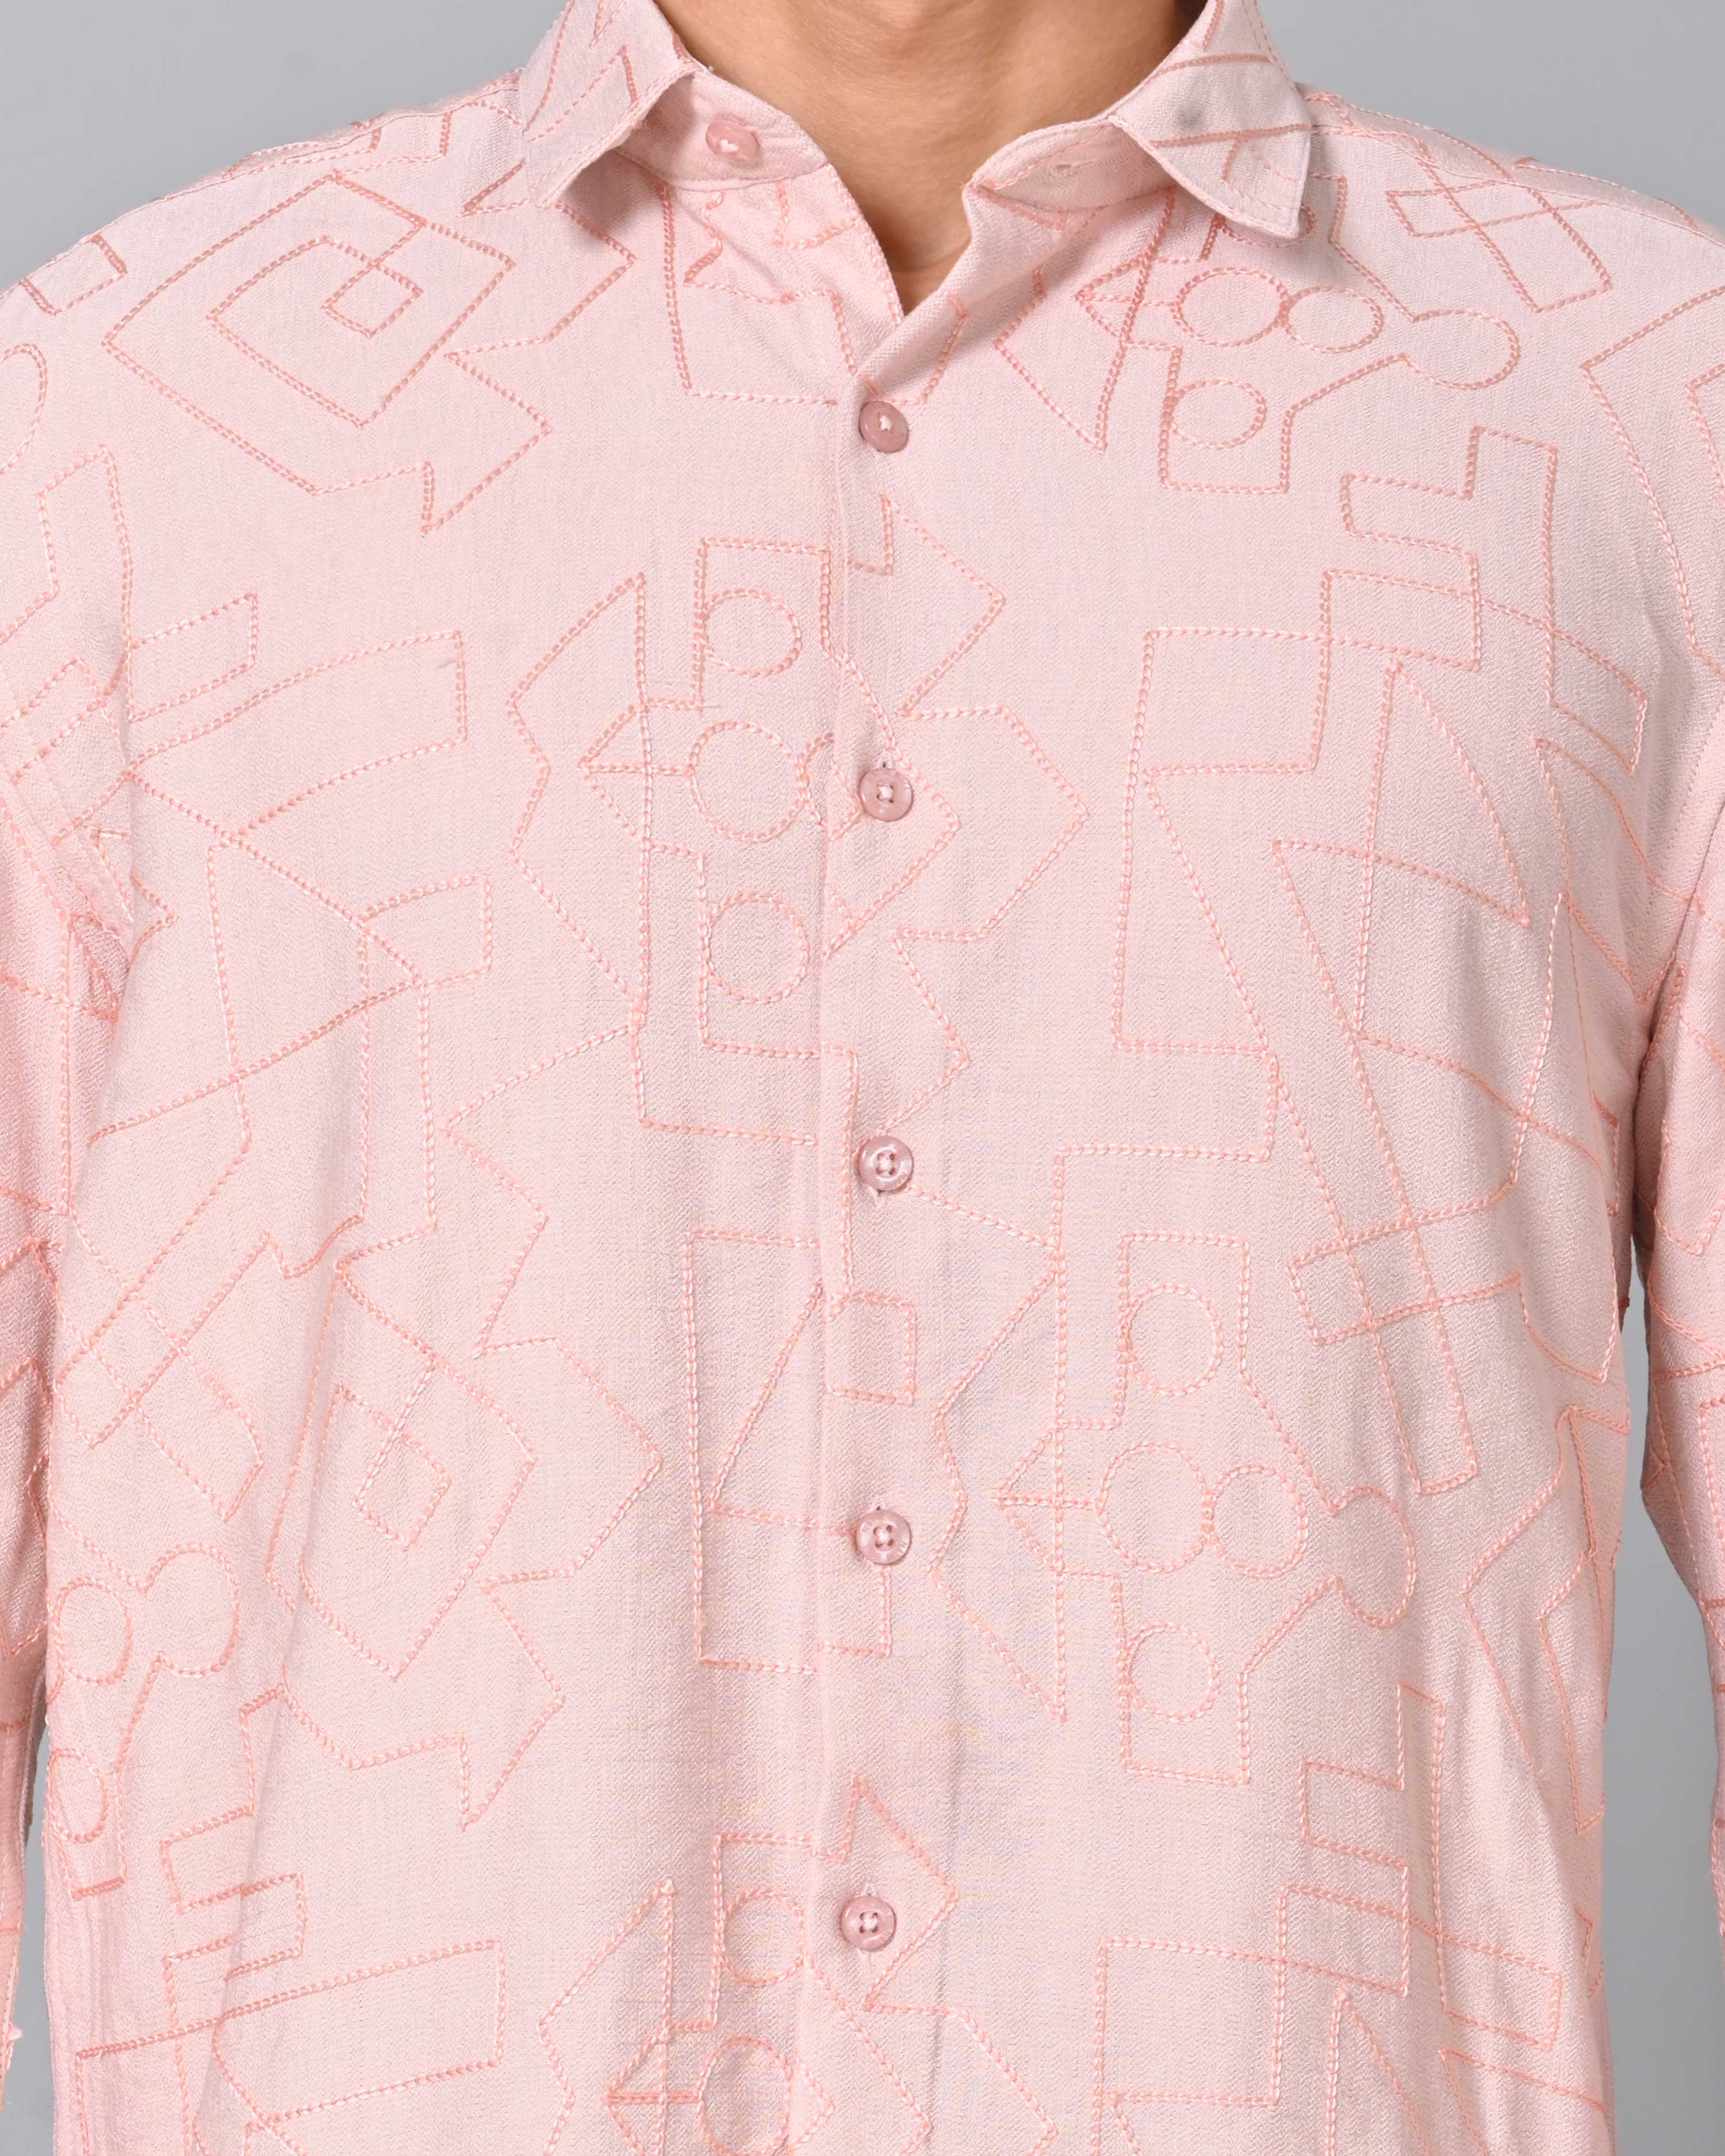 Shop Men's Embroidered Light Pink Shirt